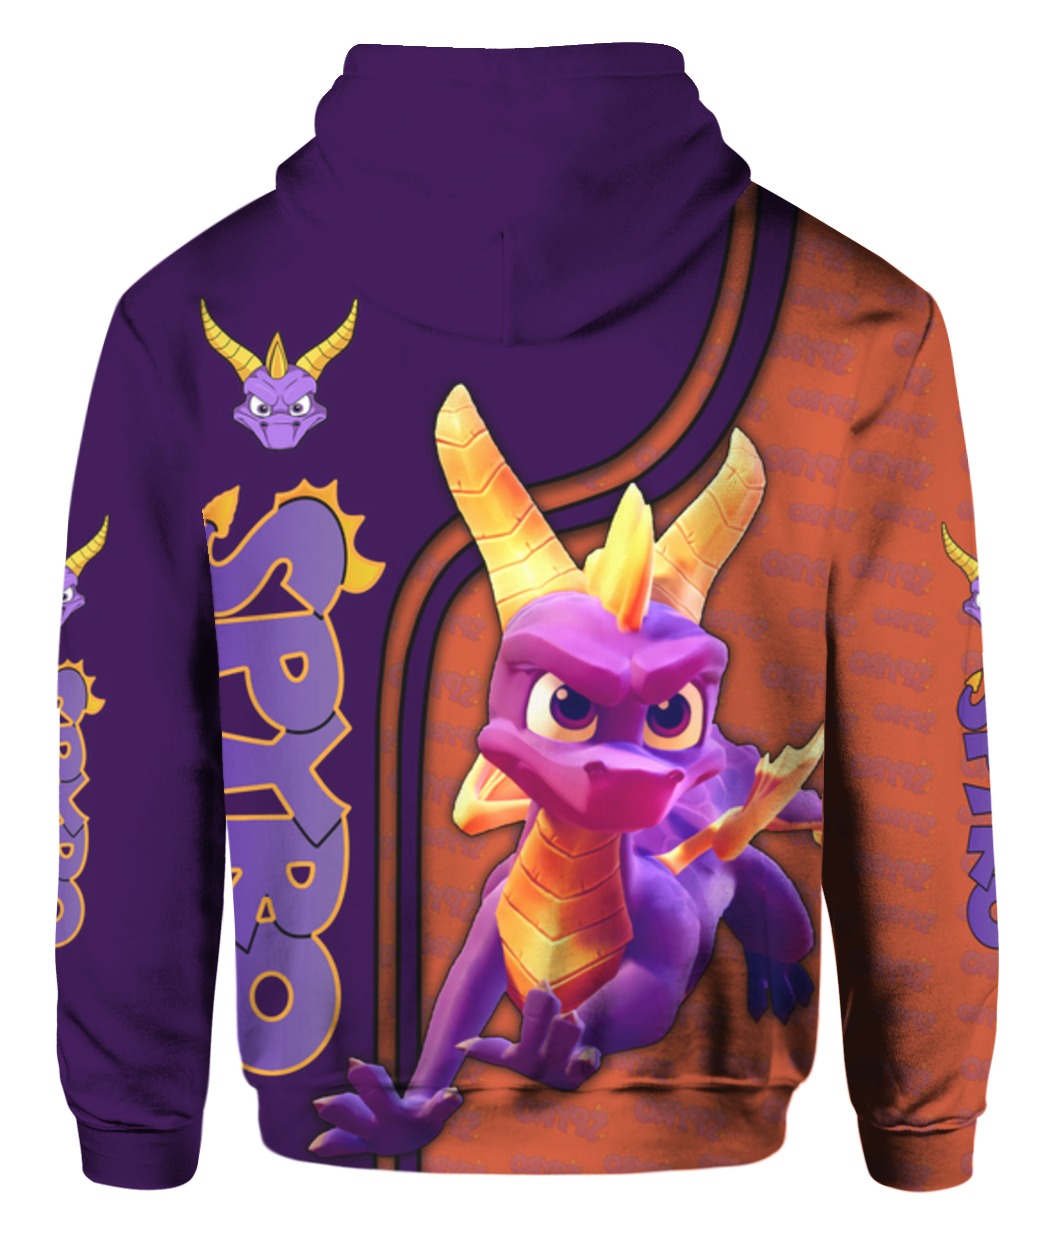 Spyro all over printed hoodie - back